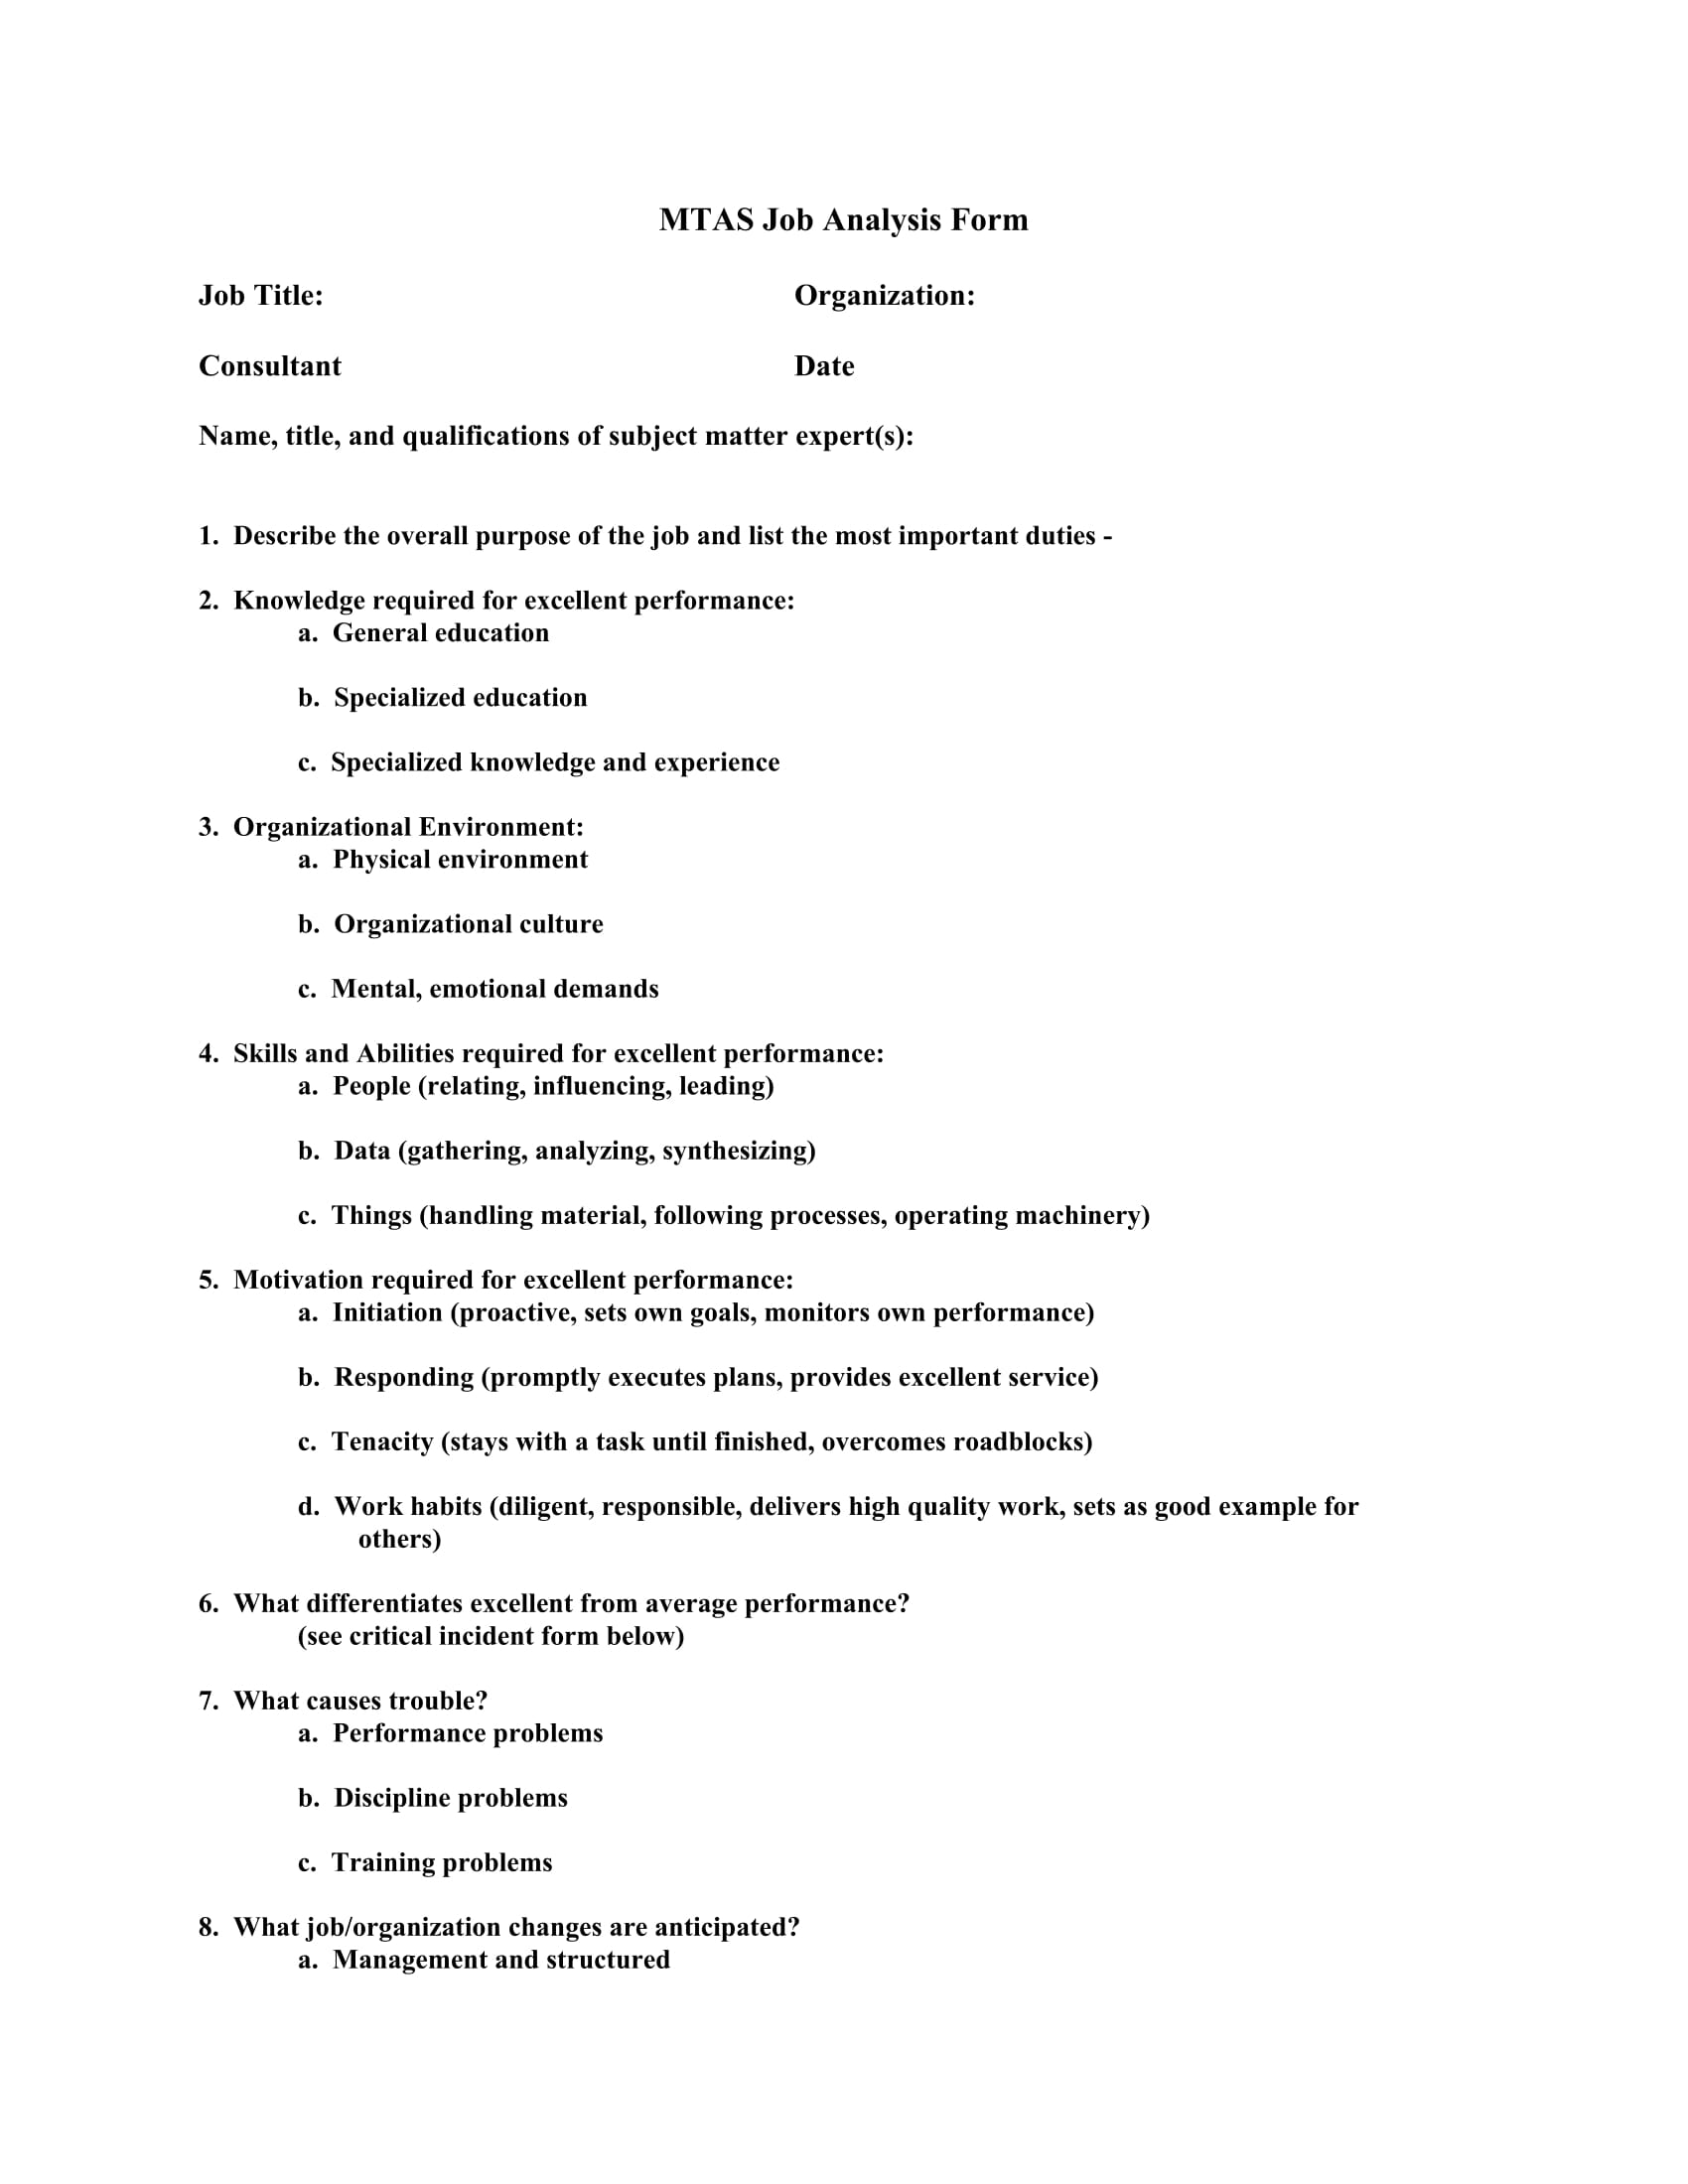 consultant job analysis form 1